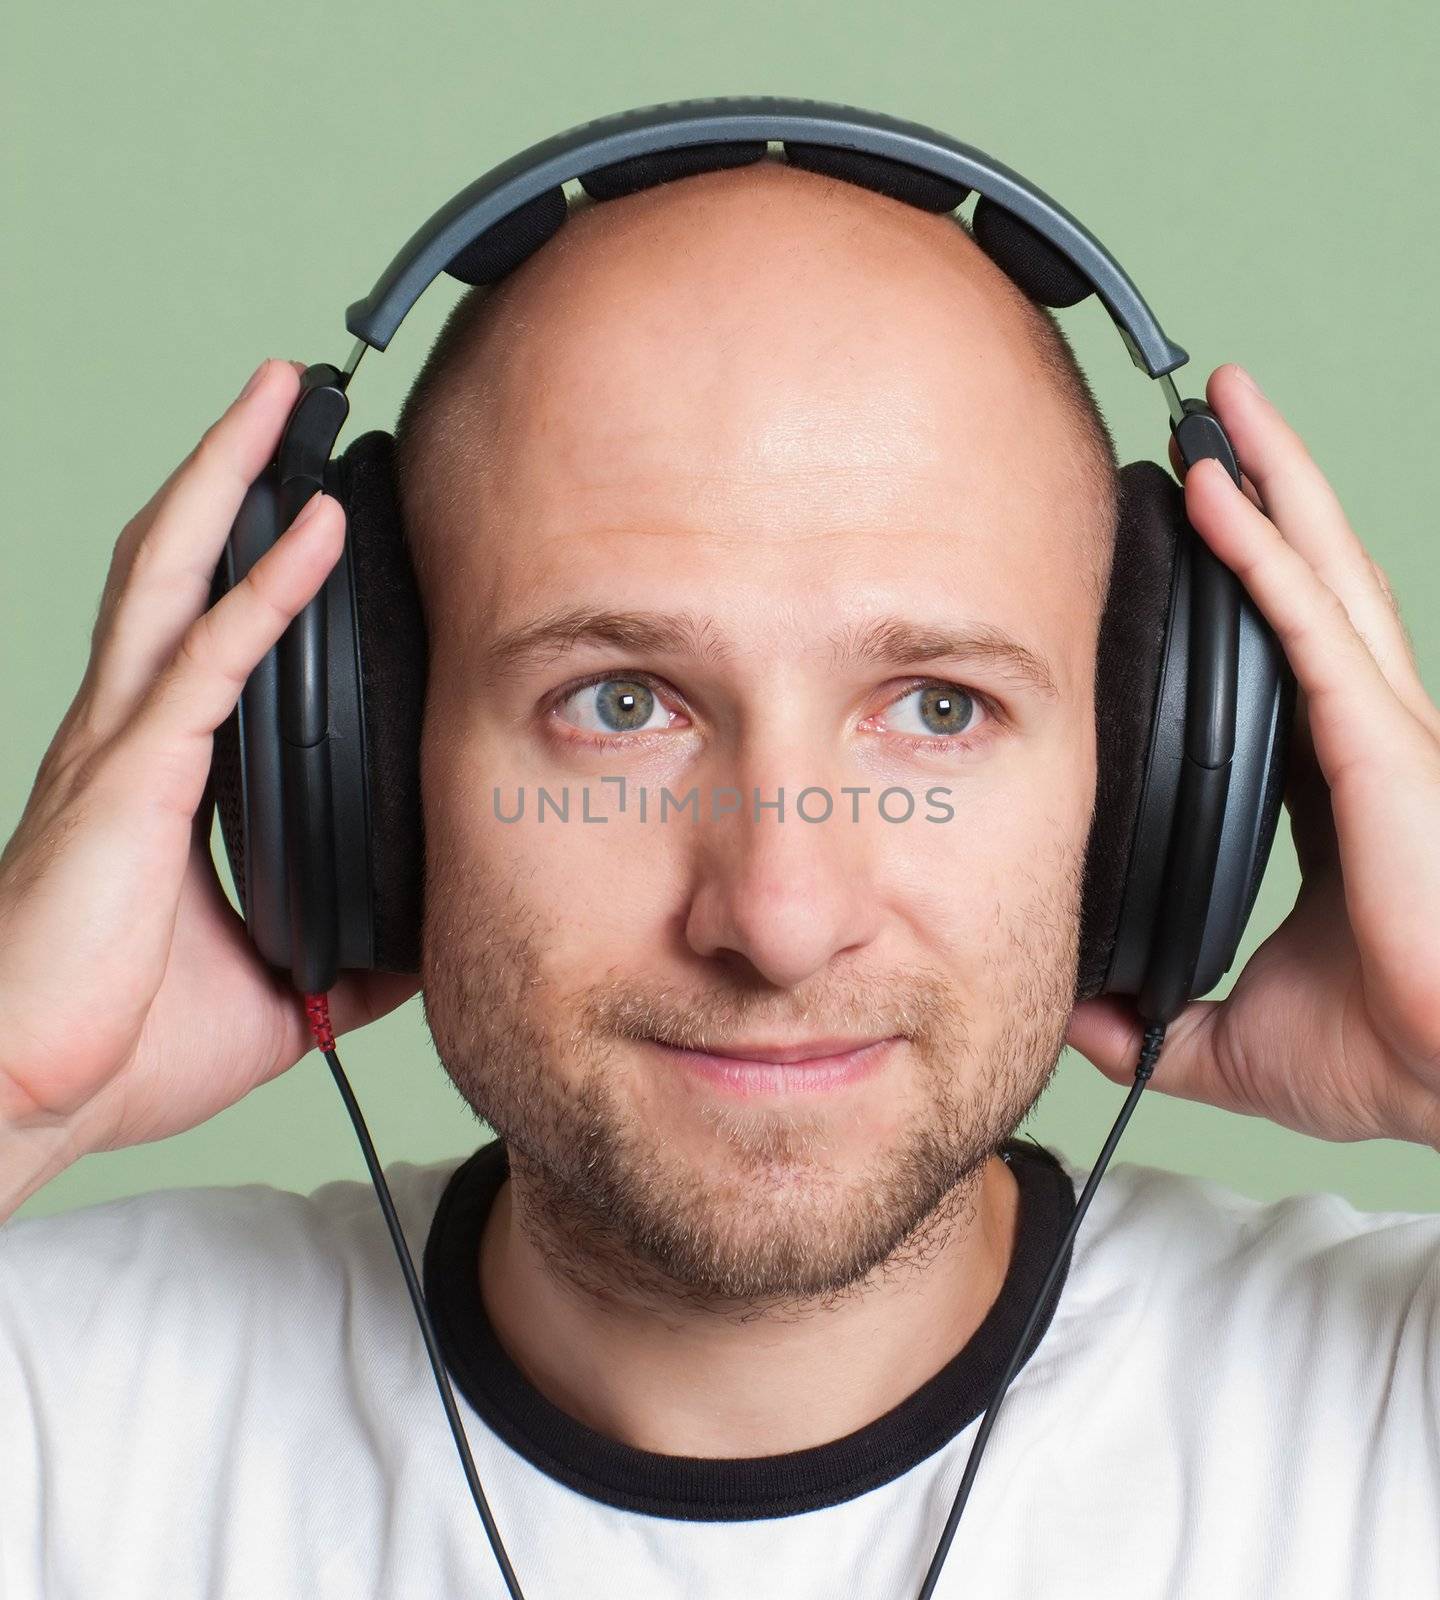 Adult men in sound headphones listening mp3 music